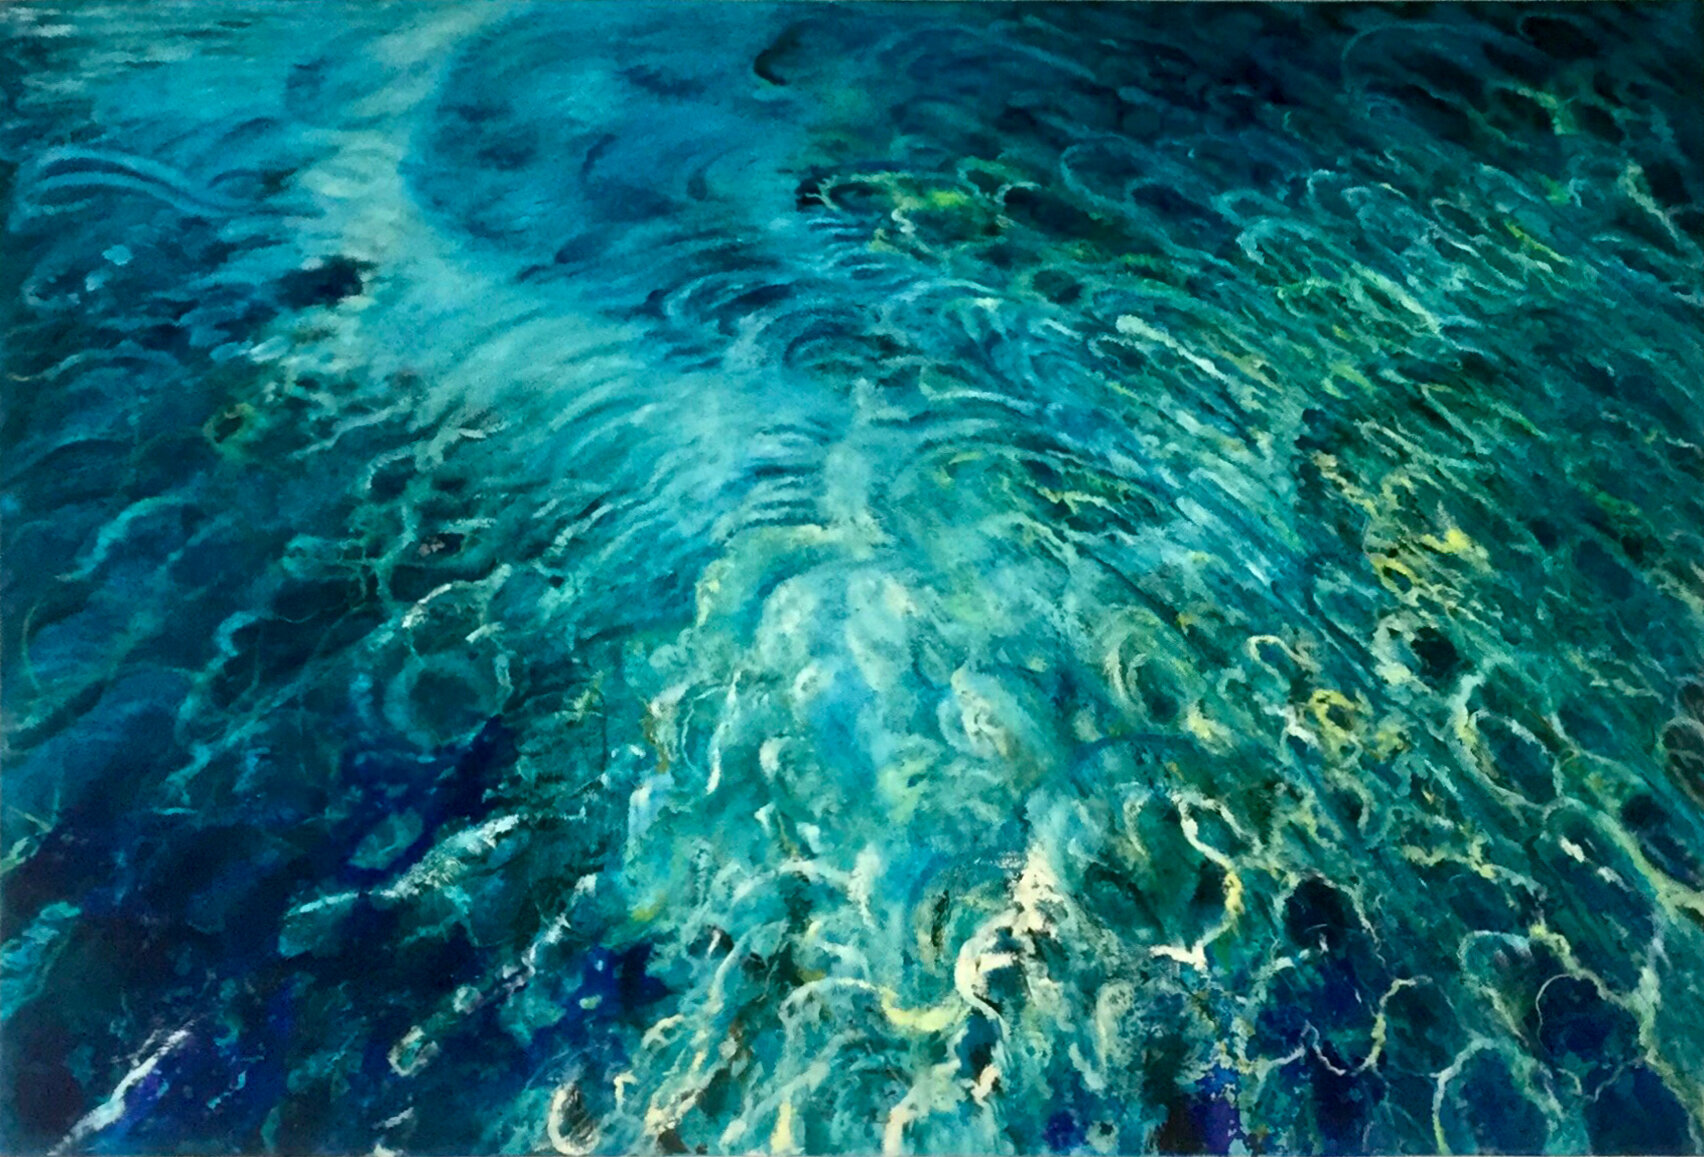  Anastasia Gklava -  Shimmer  - Oil on canvas - Dim: 39x59 in / 100x150 cm  